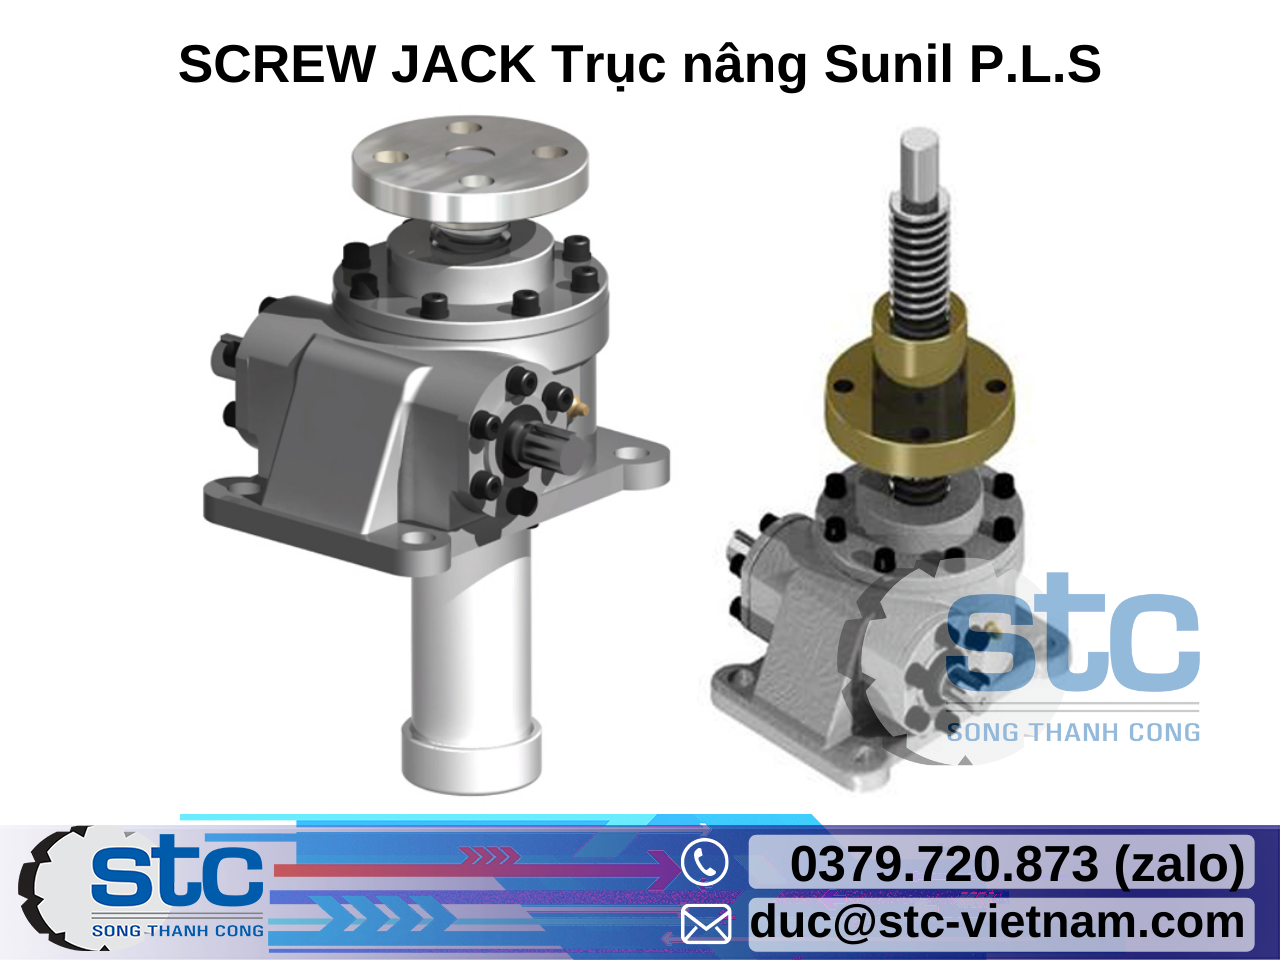 screw-jack-truc-nang-sunil-p-l-s.png